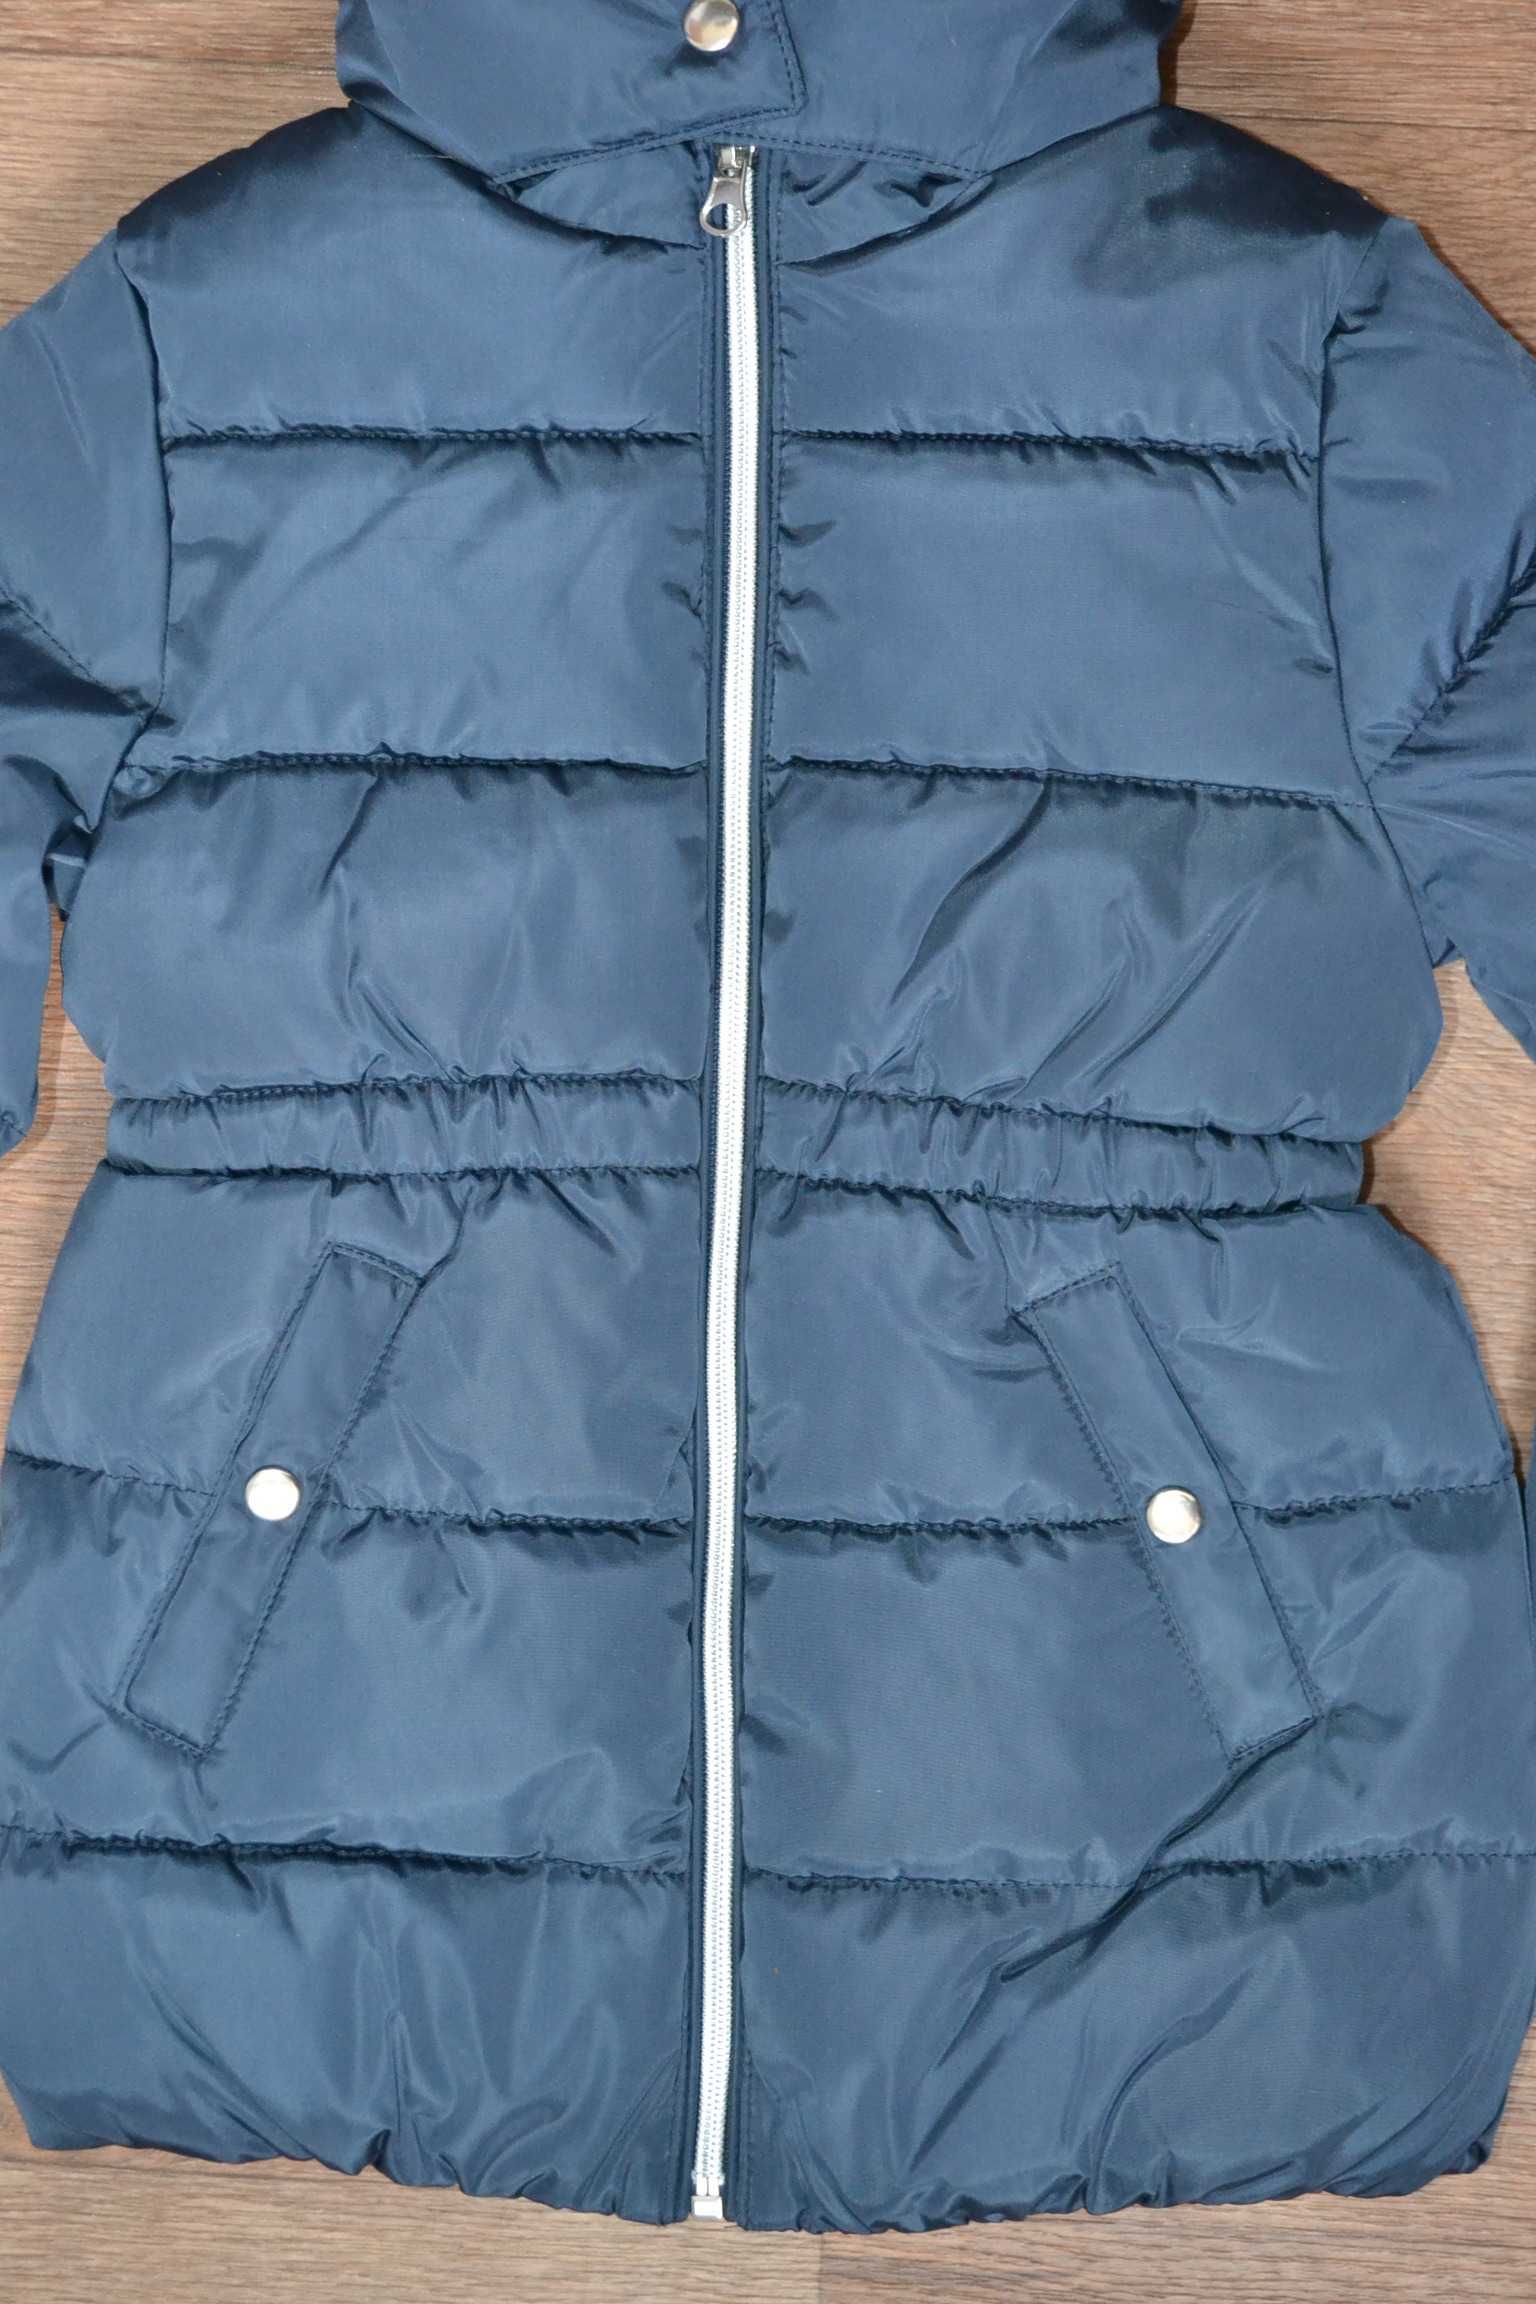 Удлиненная зимняя куртка kiki&koko оригинал германия 104р